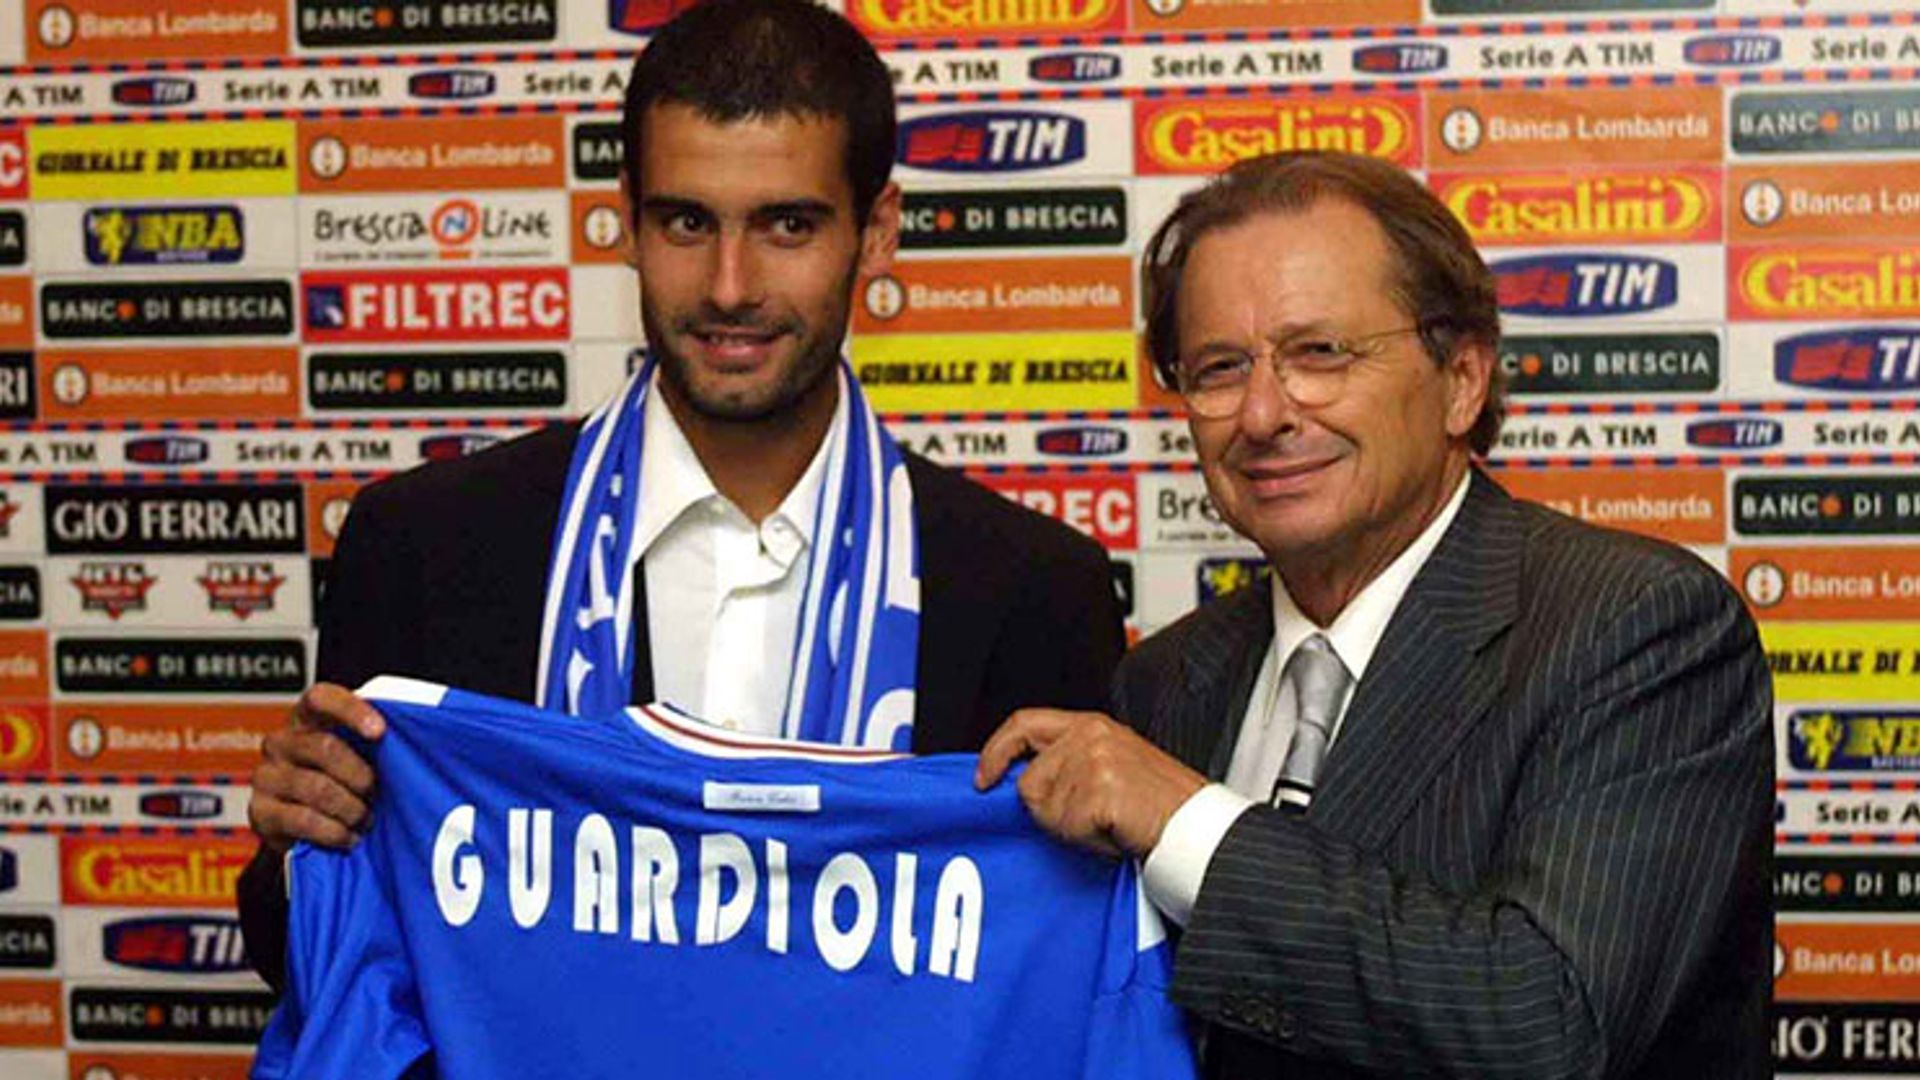 In 2001, Guardiola joined Brescia